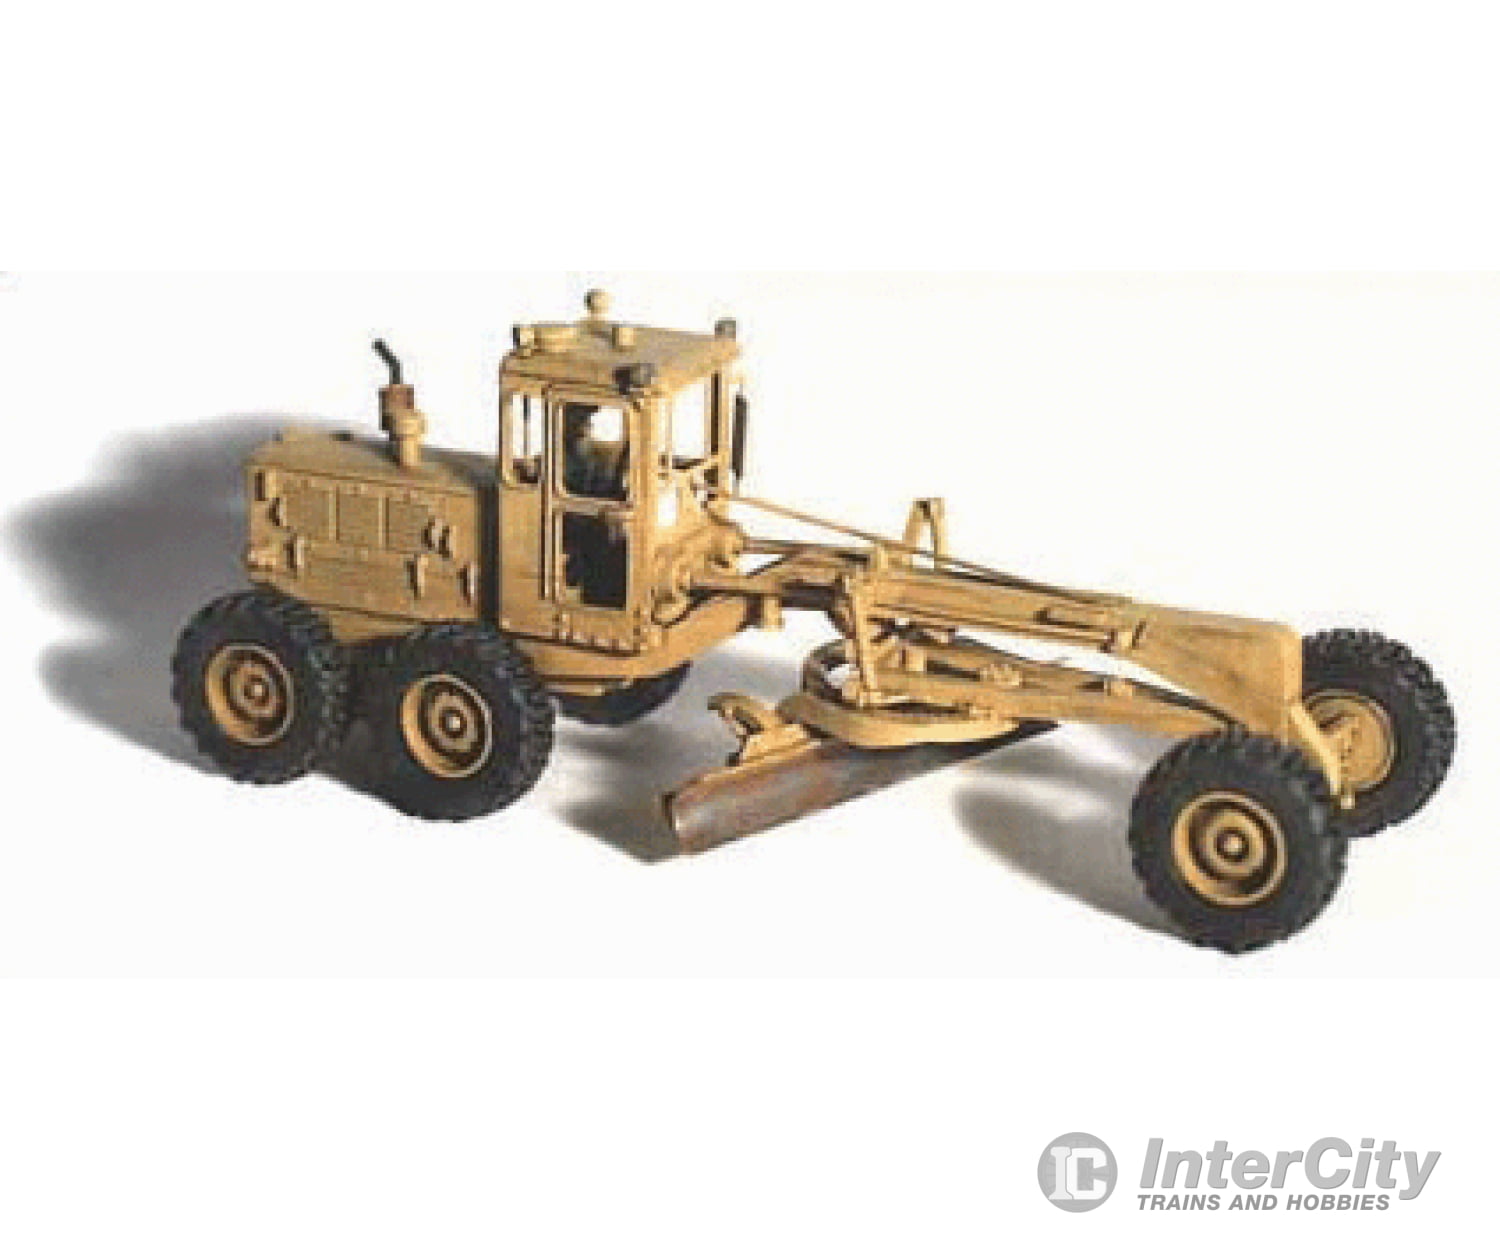 Ghq Ho 61008 Construction Equipment (Unpainted Metal Kit) -- 120 Road Grader W/Operator Figure Cars